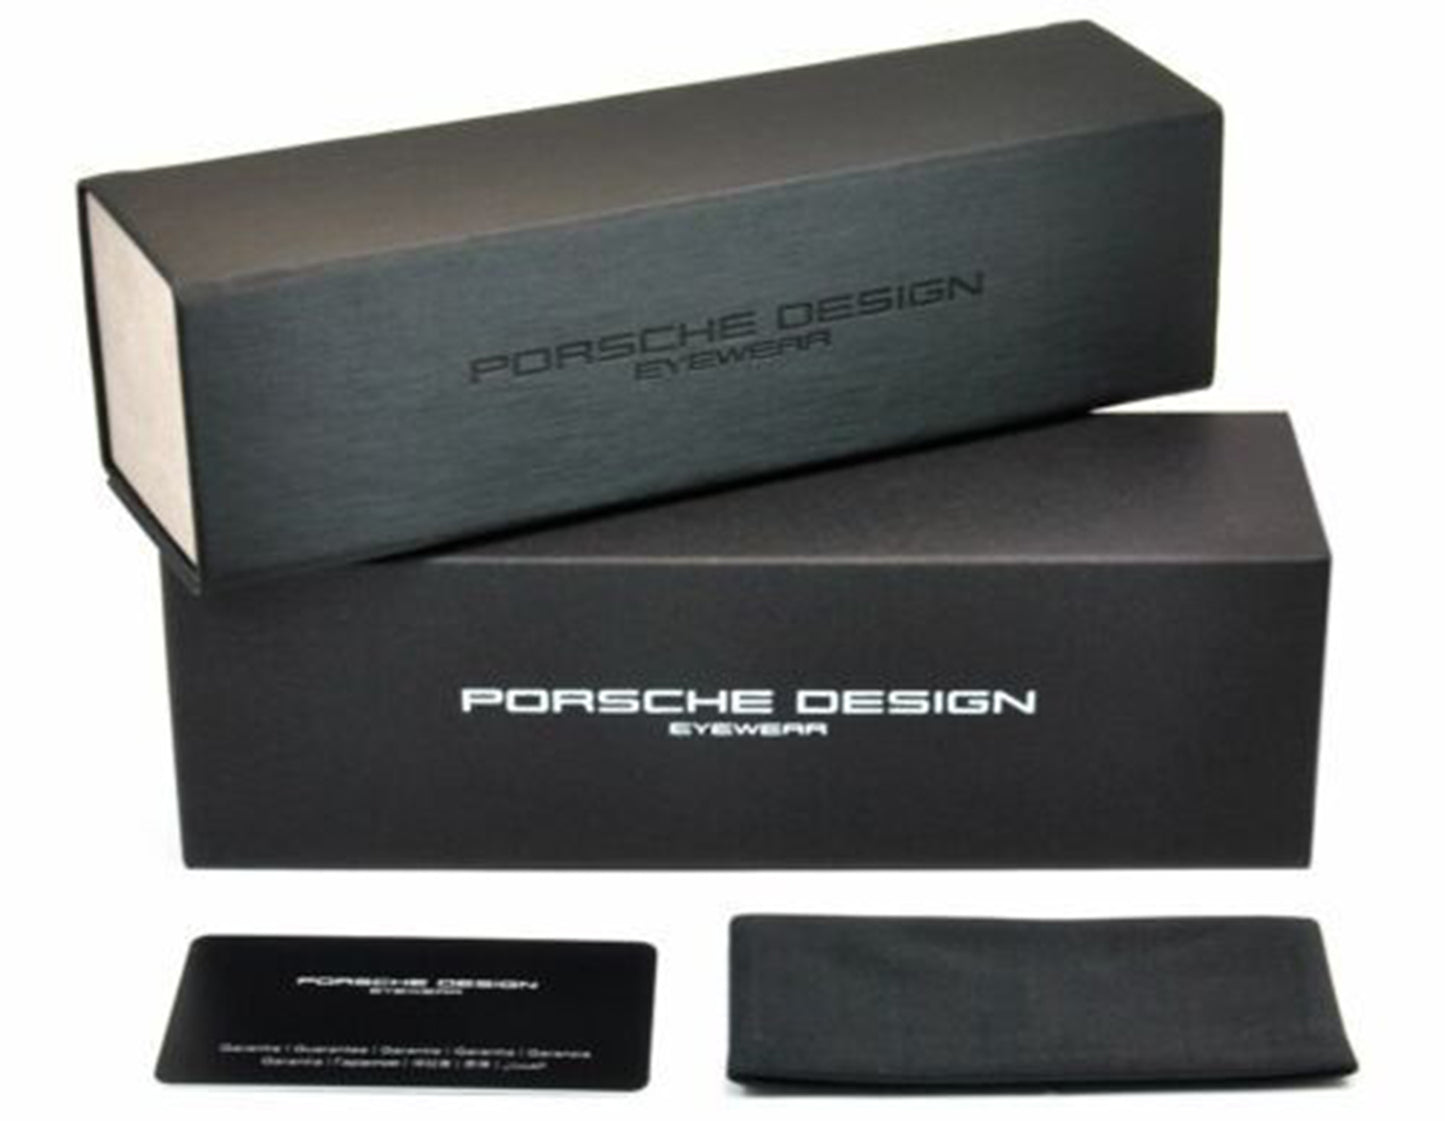 Porsche P8707-B 54mm New Eyeglasses